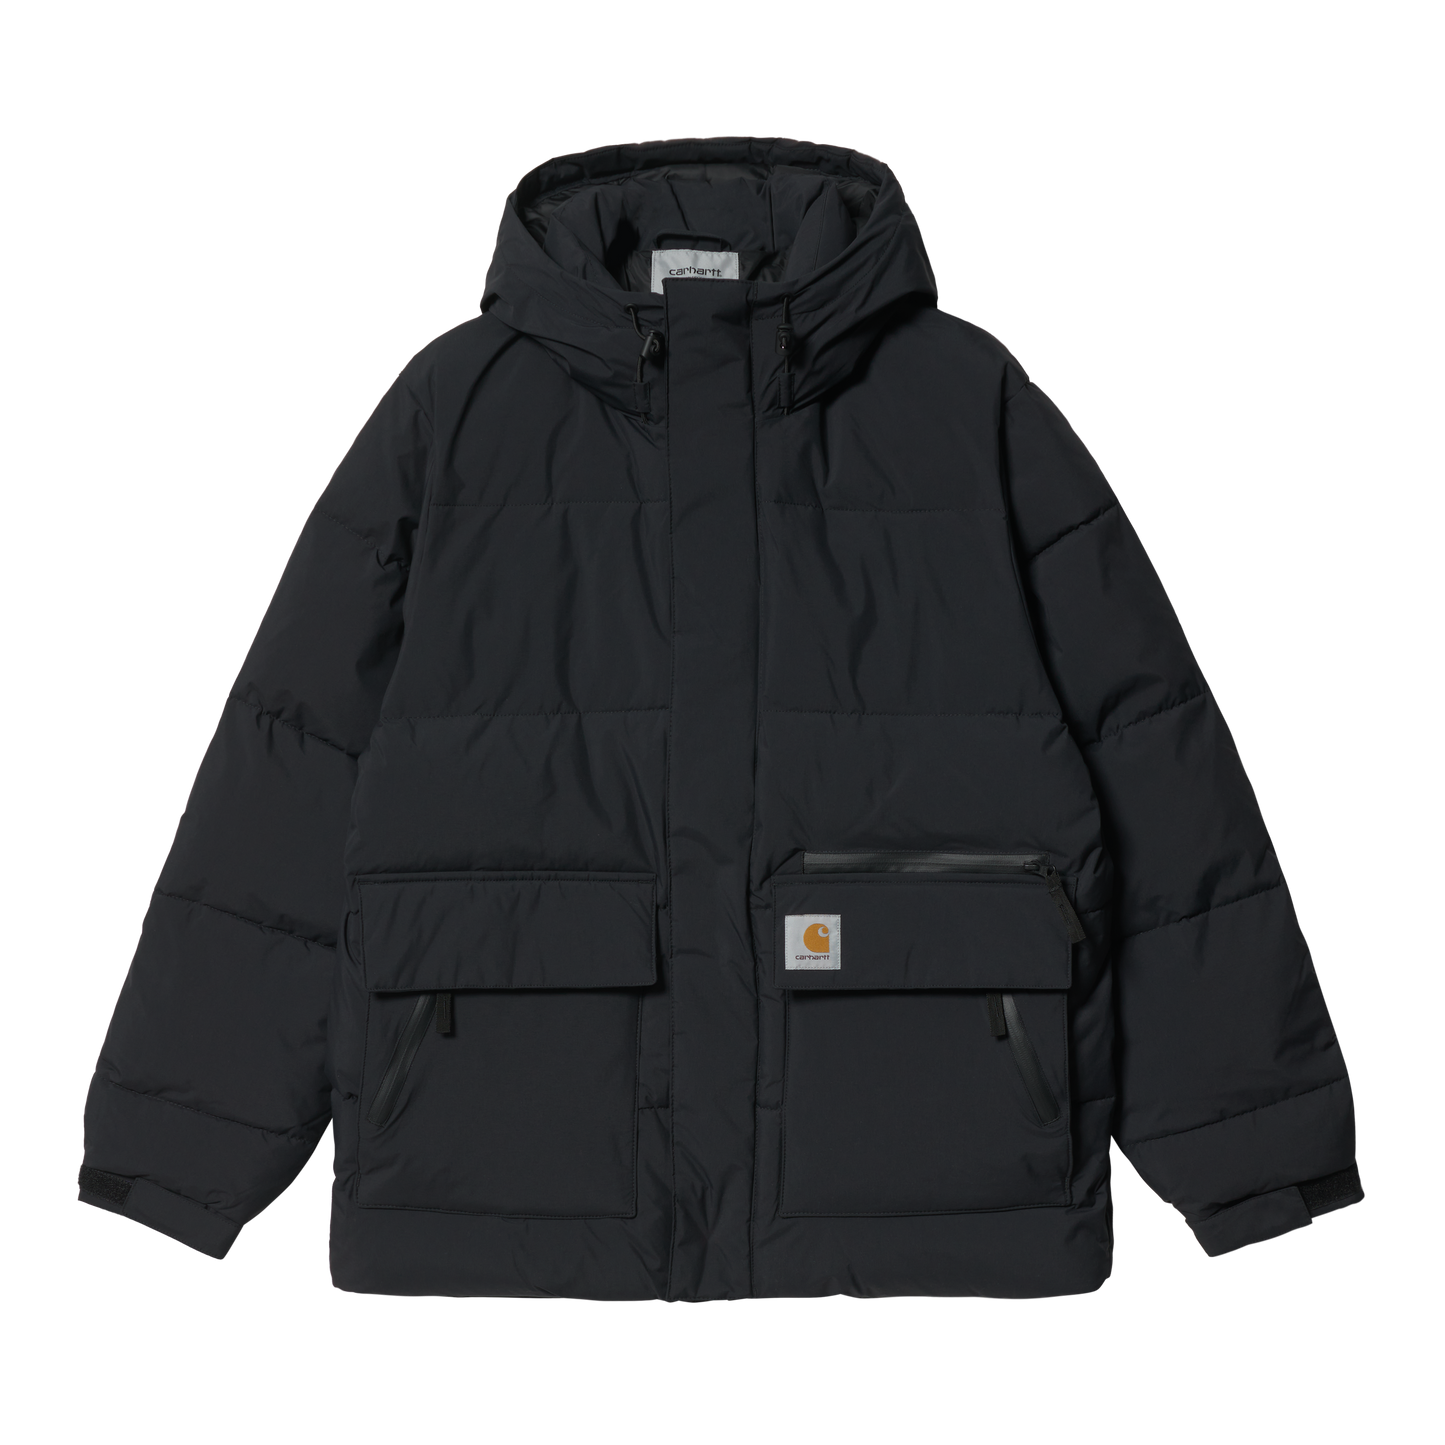 Carhartt WIP Munro Jacket